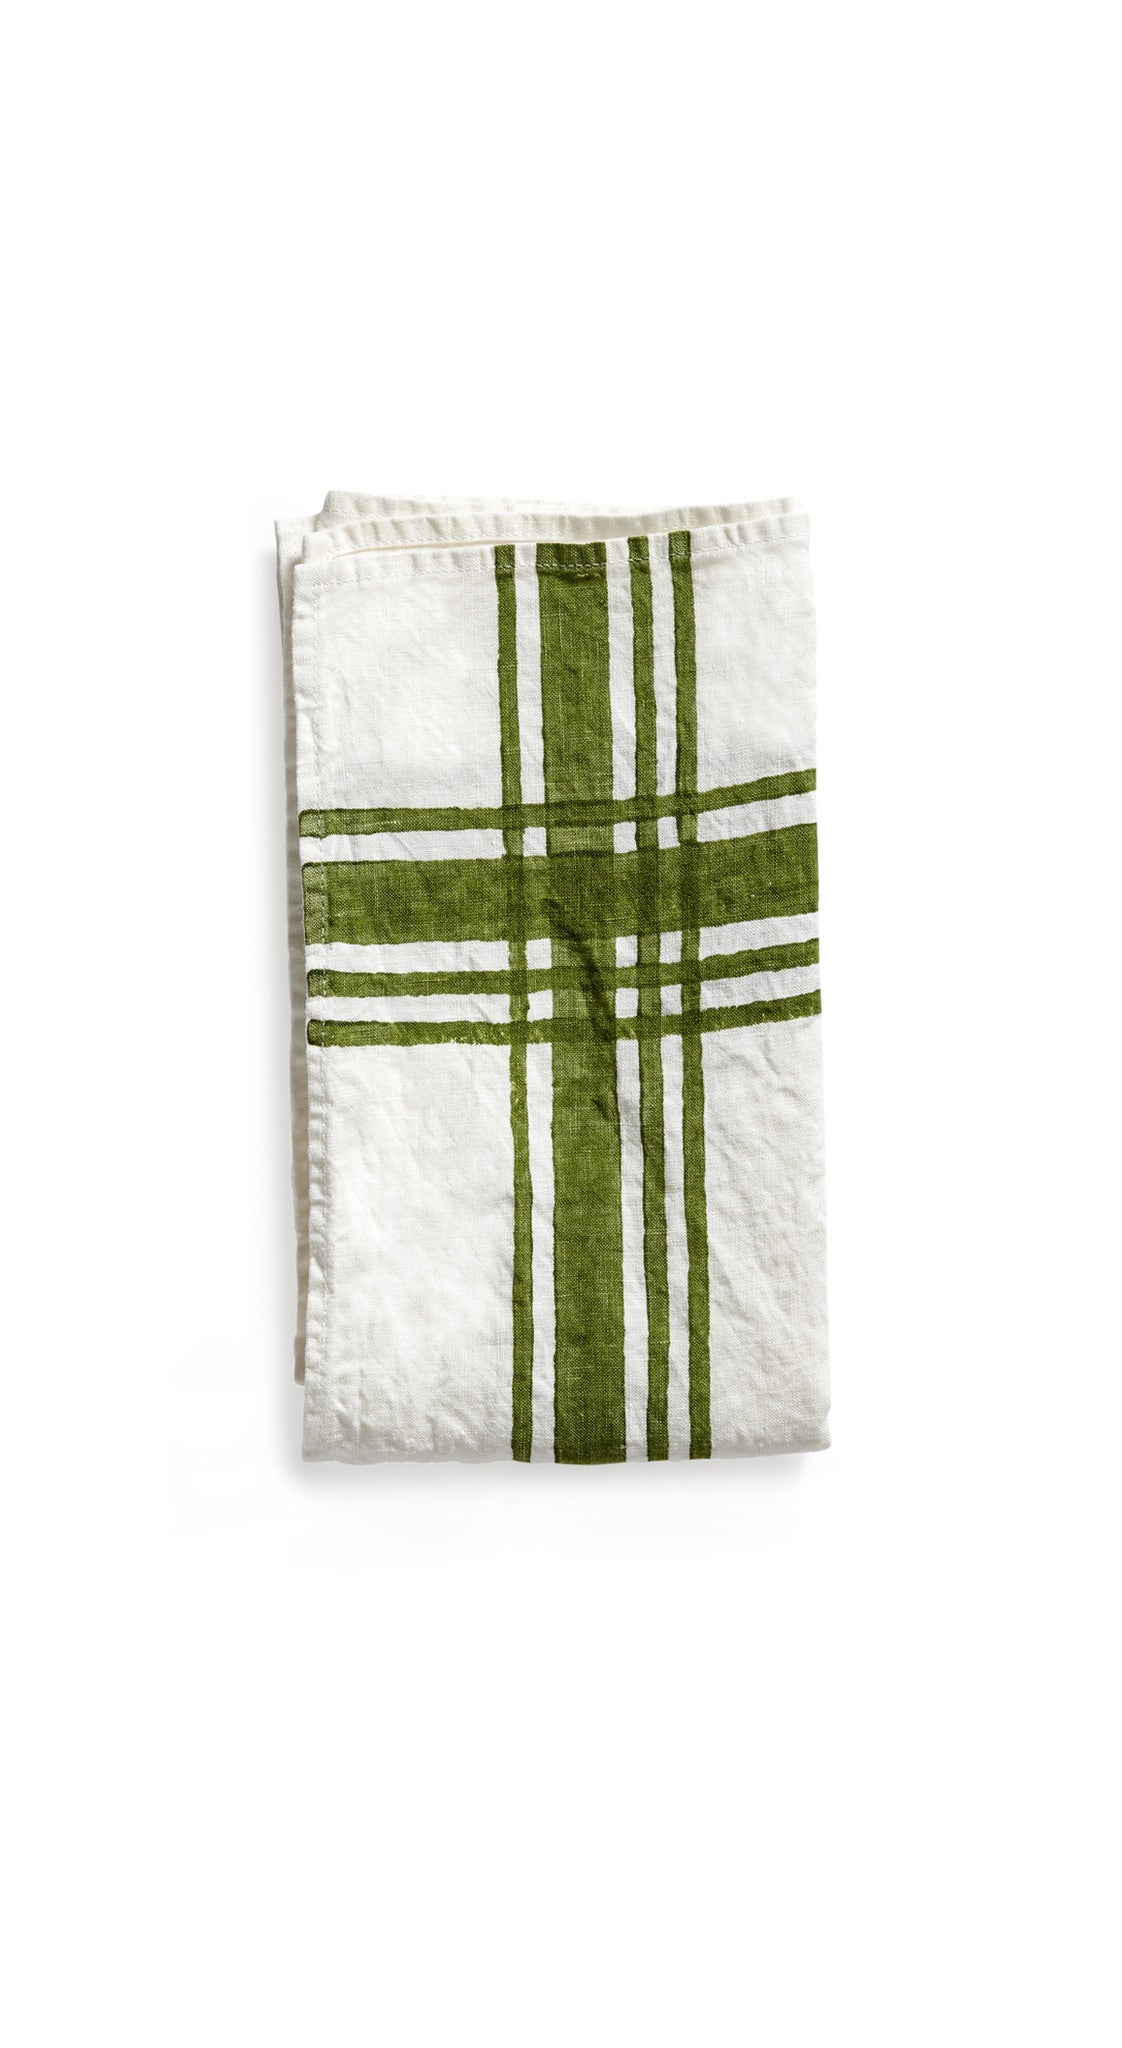 Stripe Linen Tea Towel in Avocado Green, 55x70cm